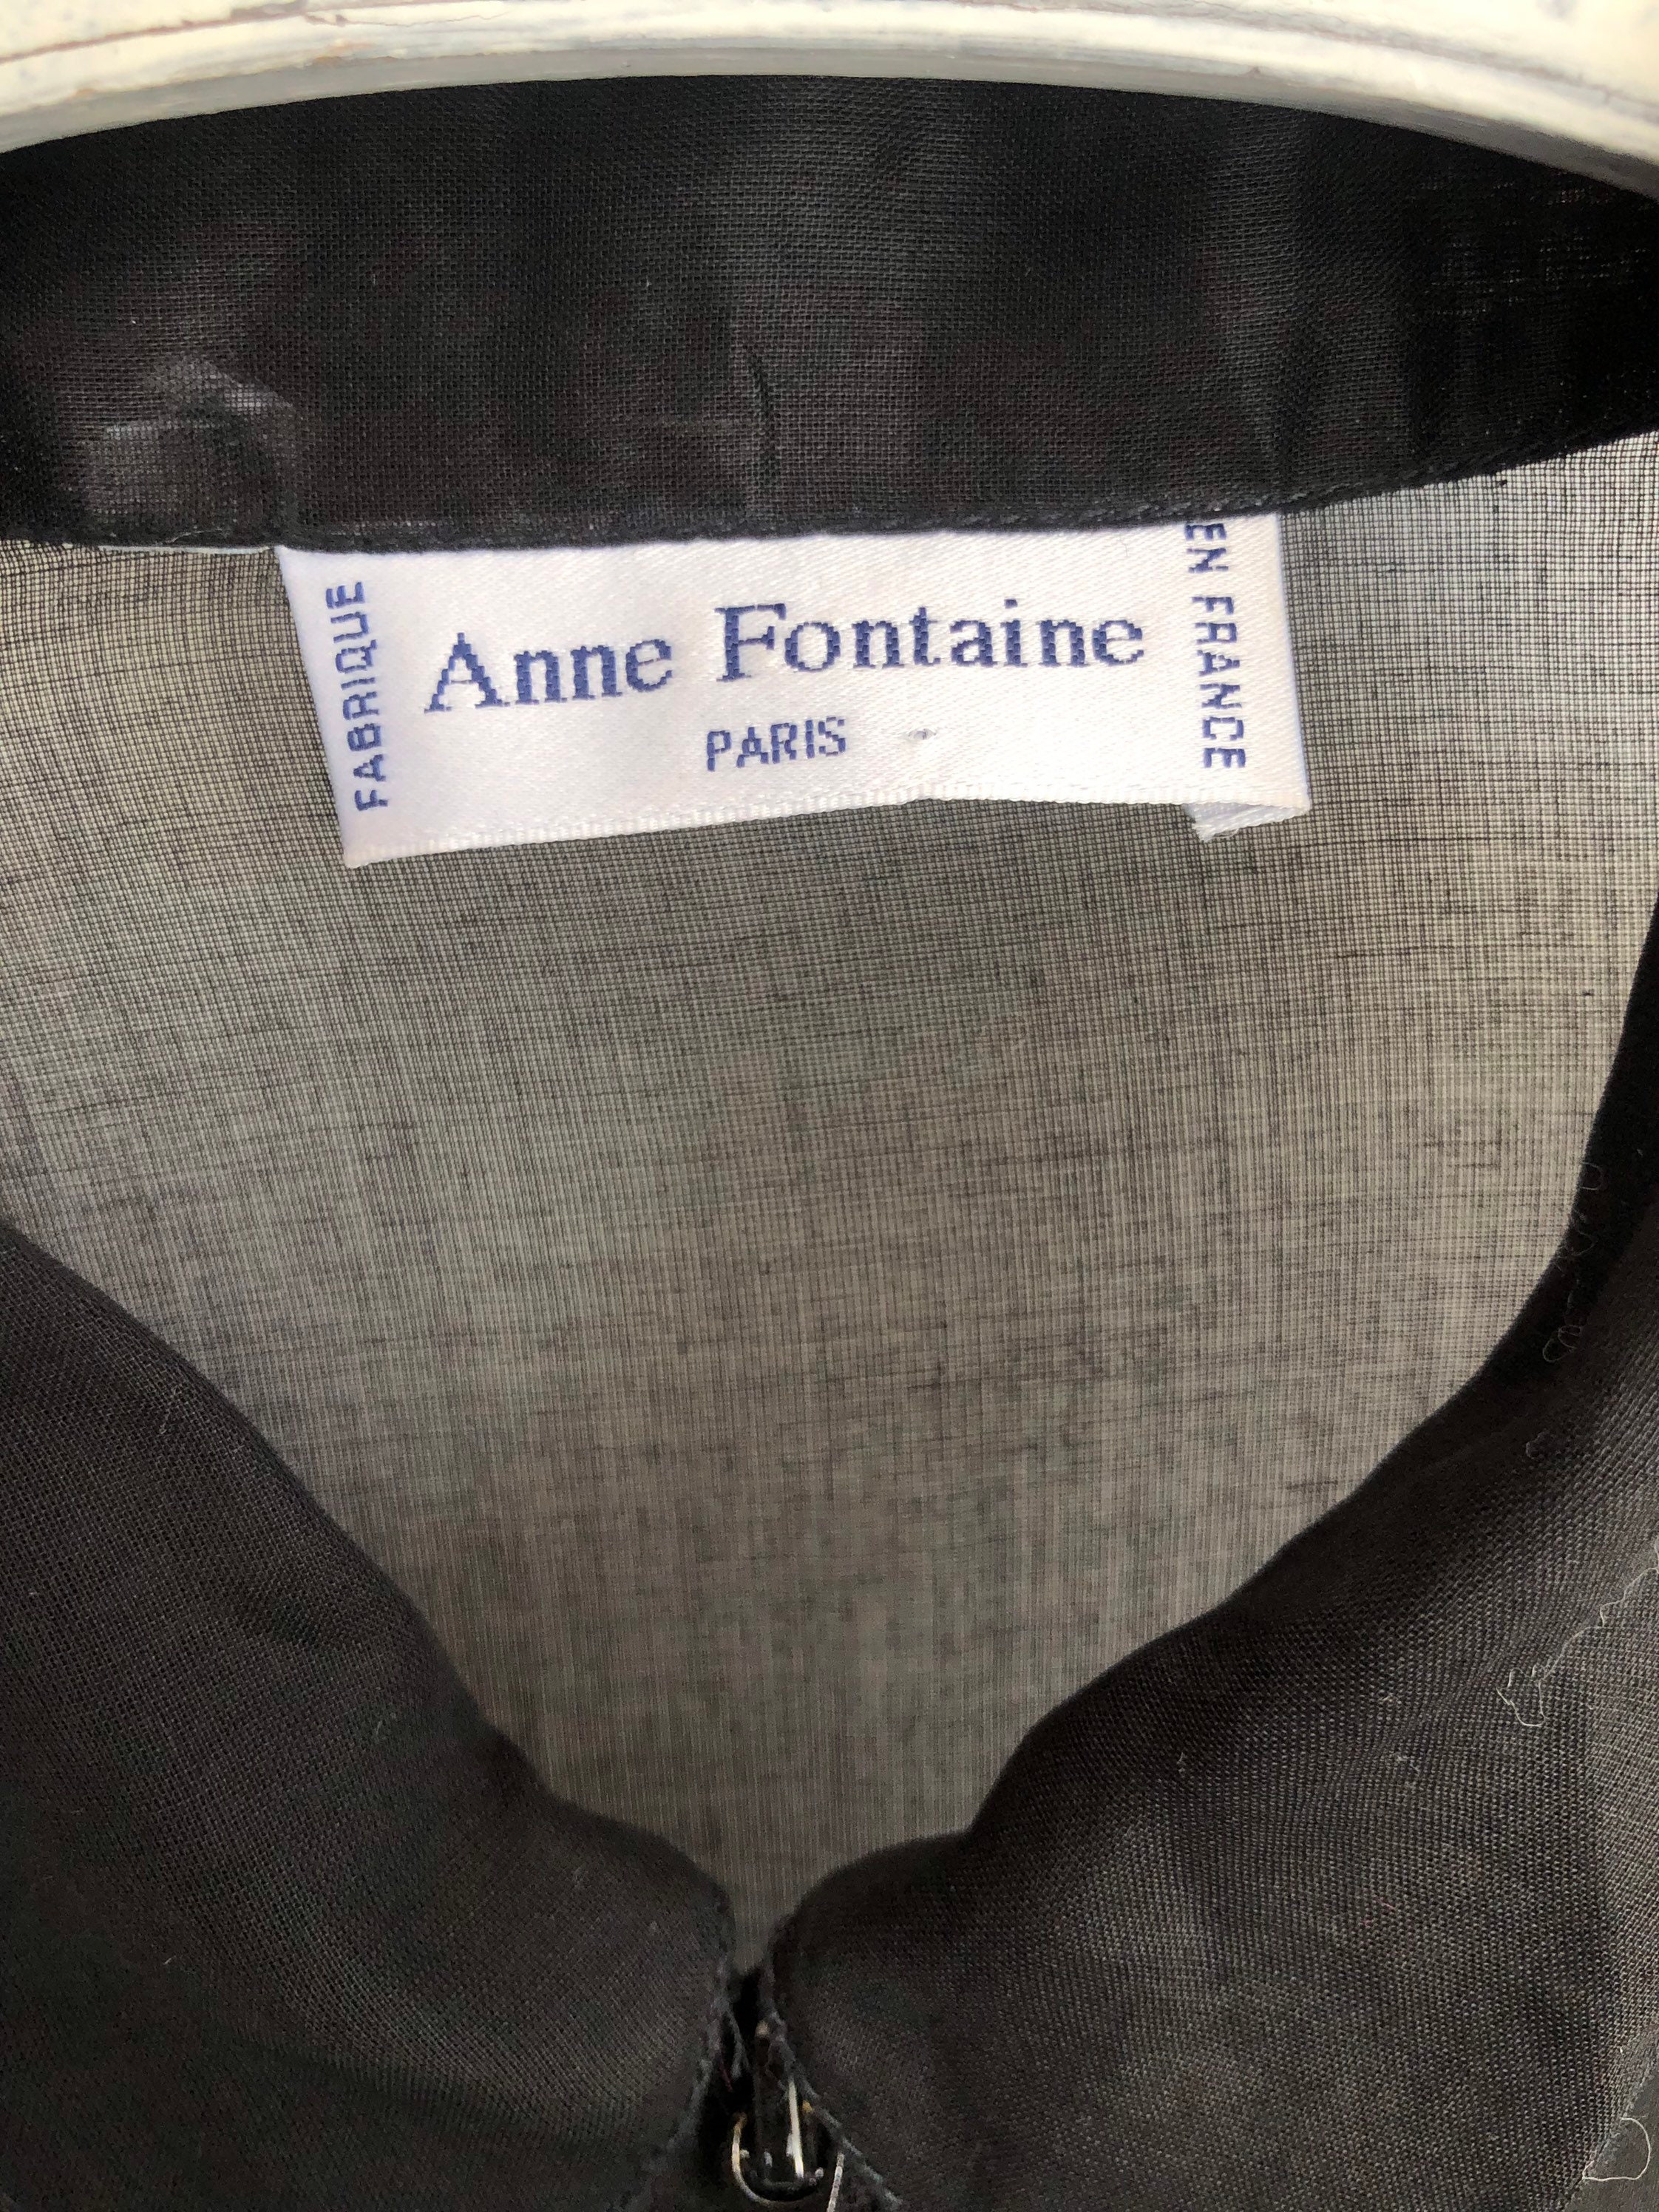 Anne Fontaine Black Sheer Organza Bomber Jacket Sz S Black - Etsy